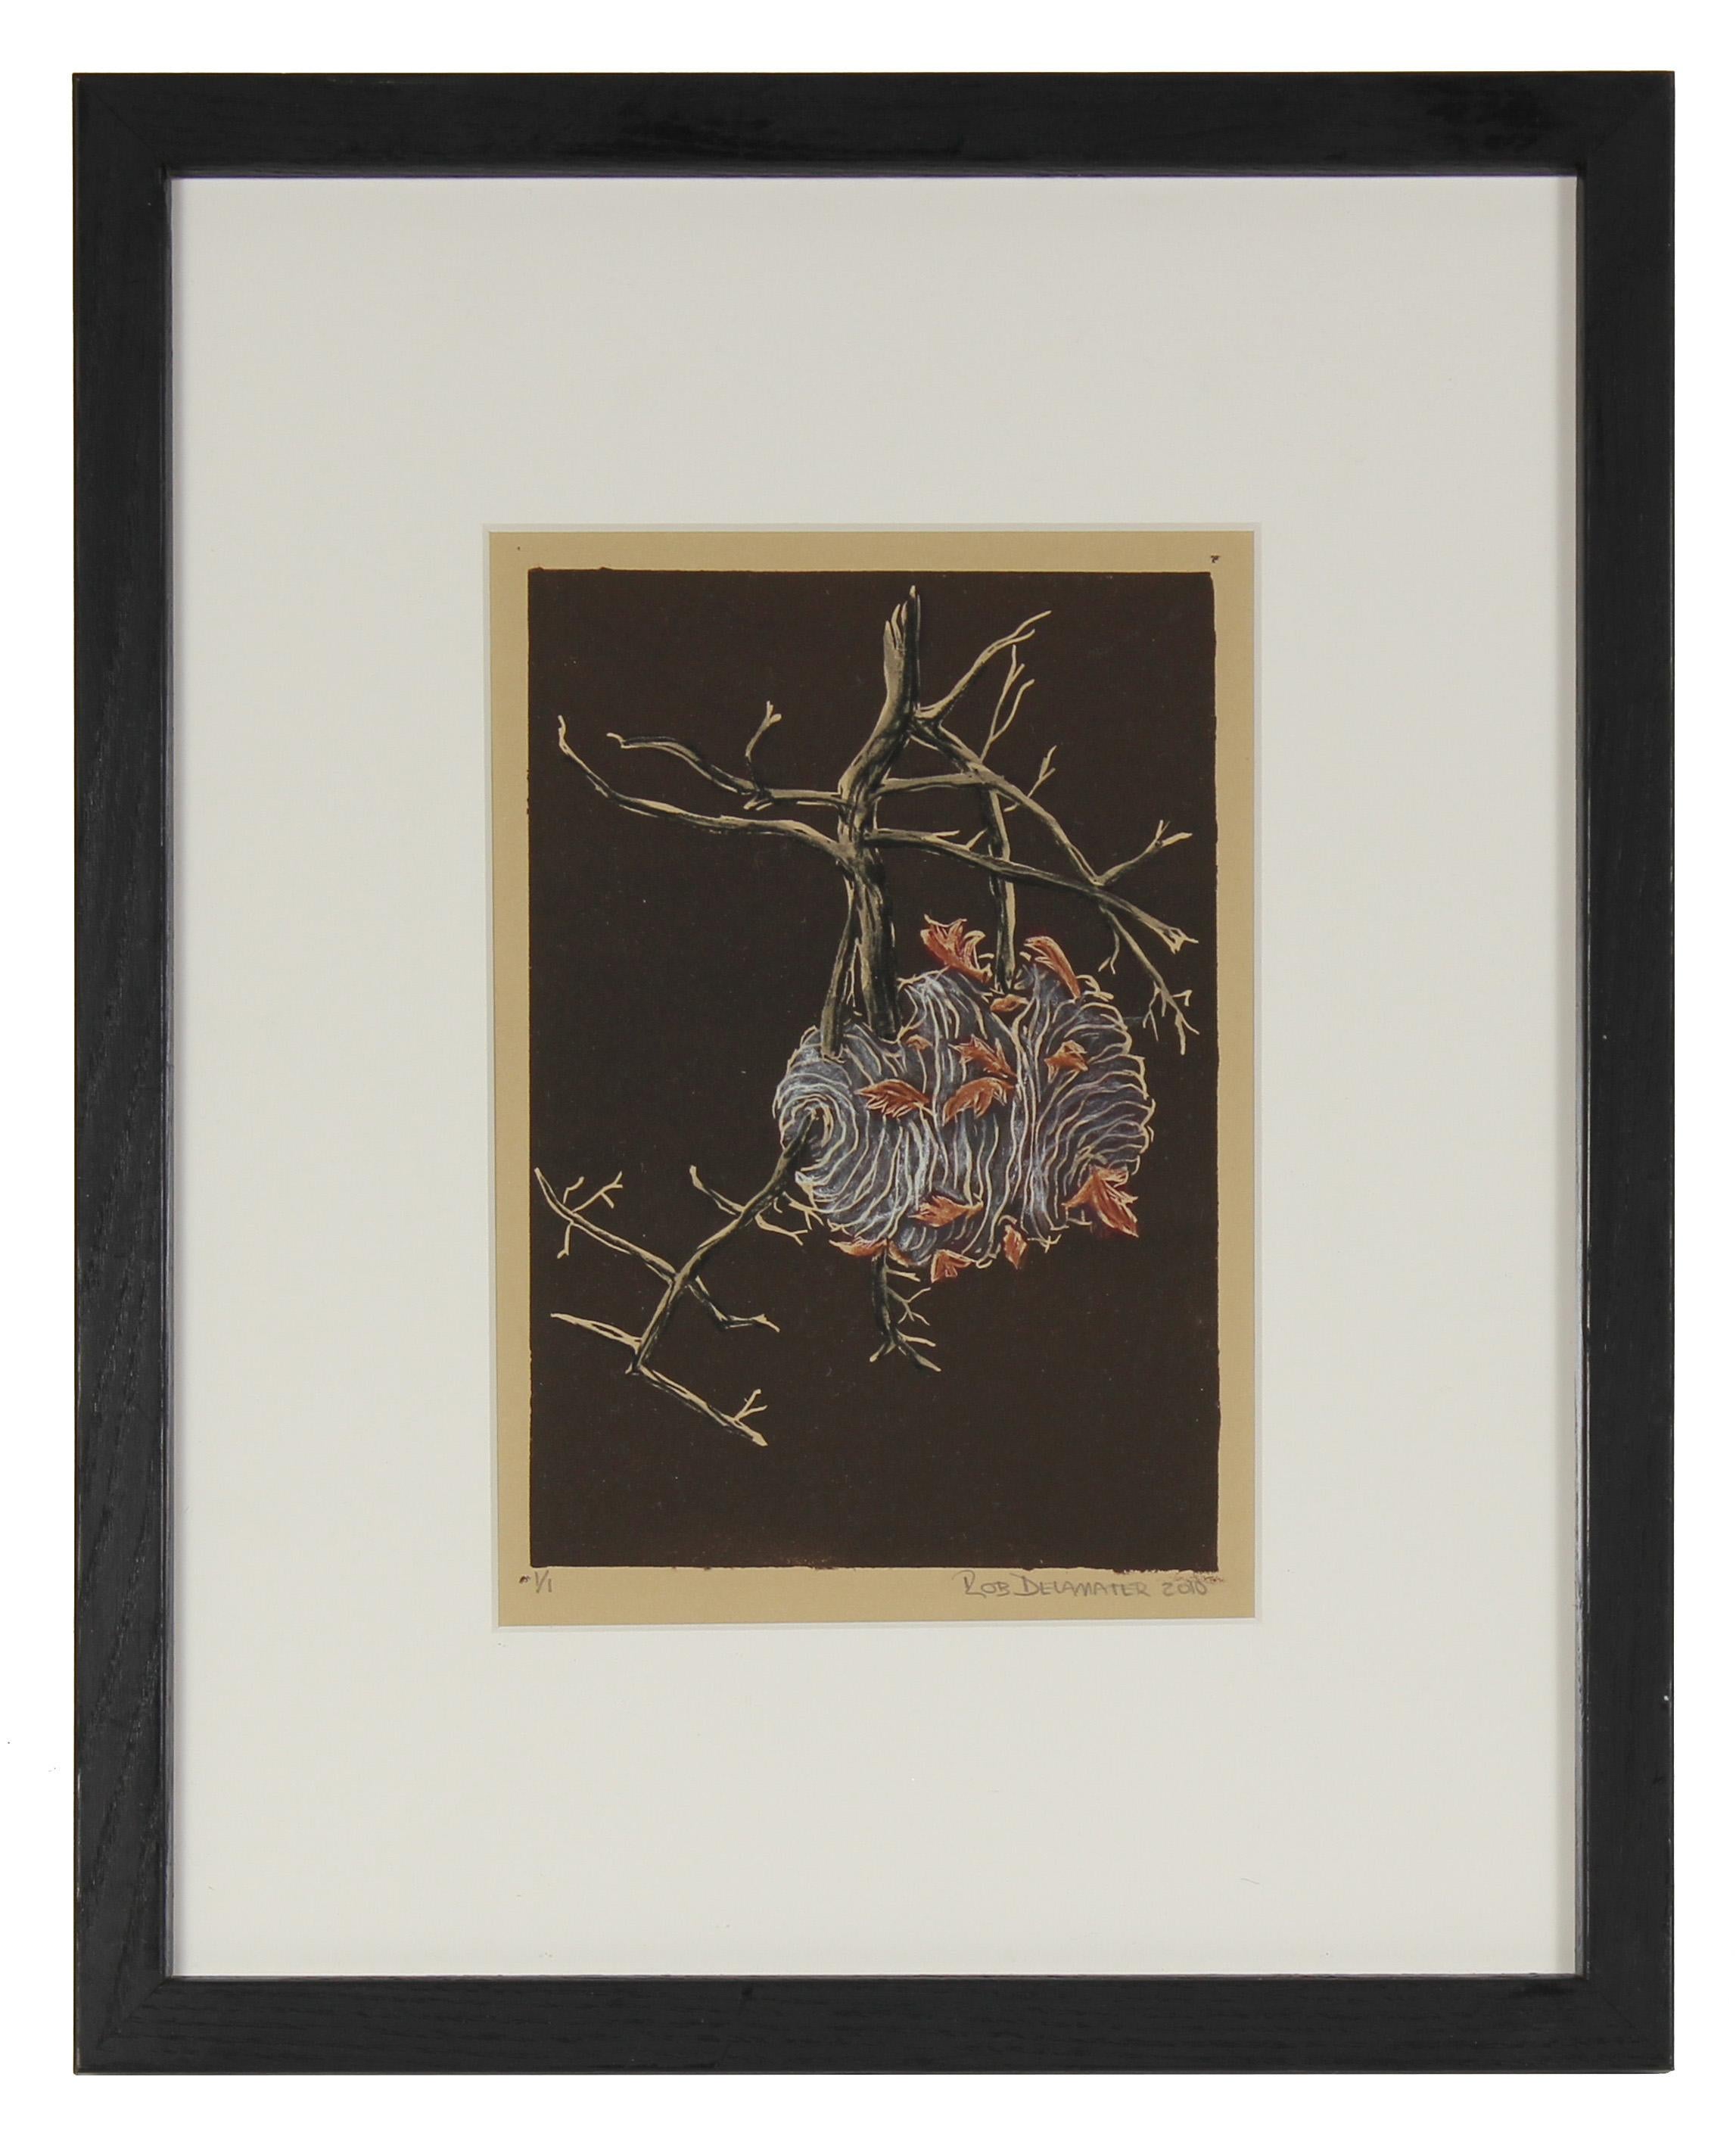 Rob Delamater Landscape Print - "Nest" Linoleum Block Print, 2010